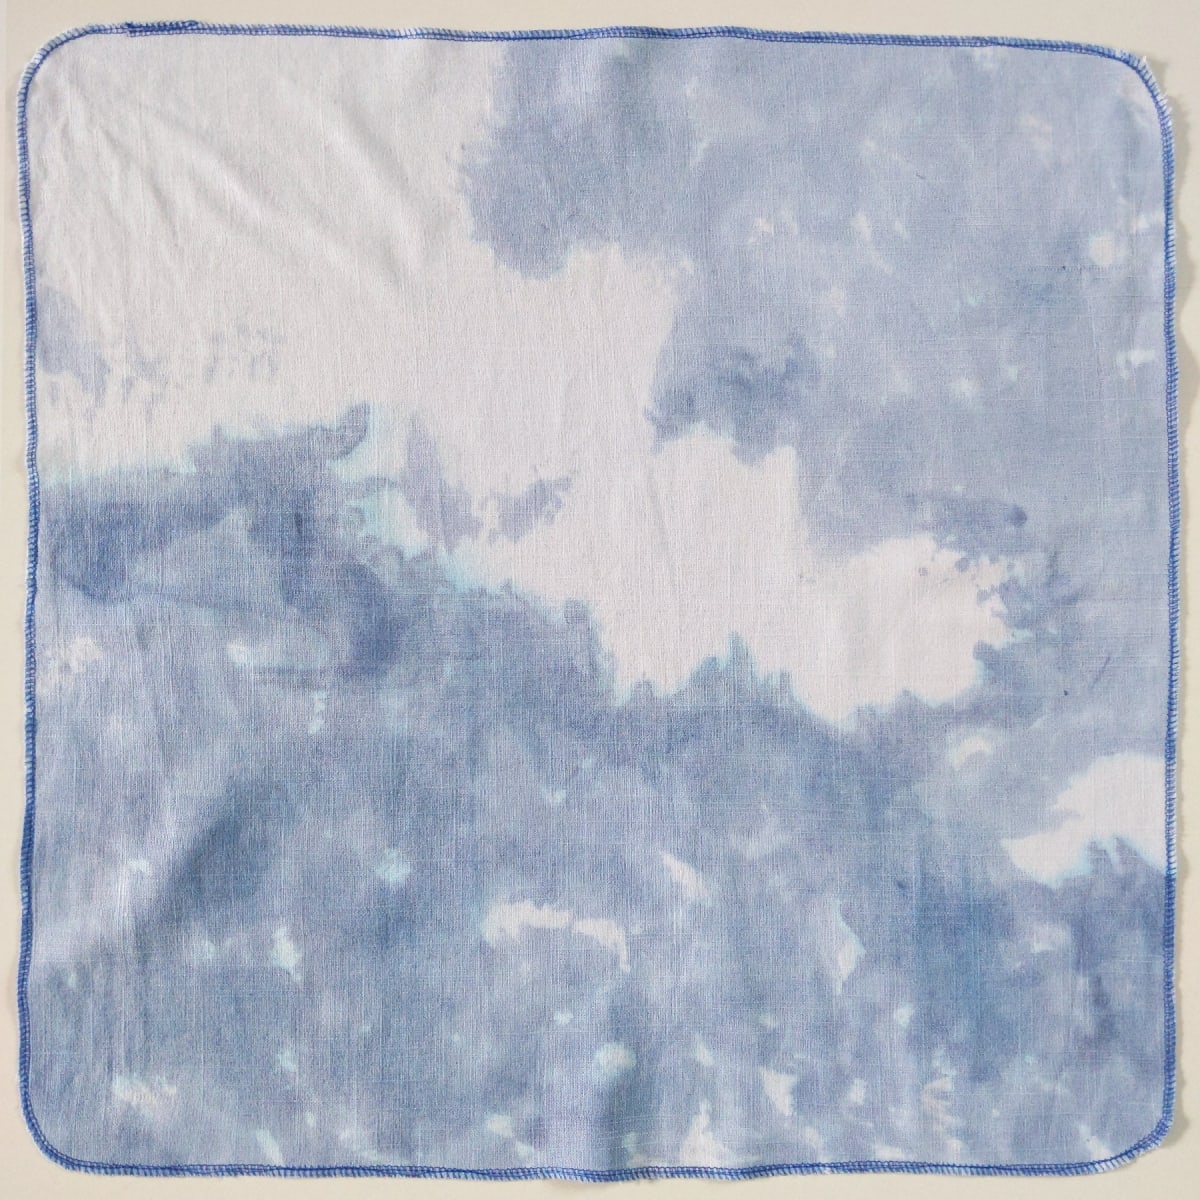 Cloud dyed napkins #7 by Savannah Jubic